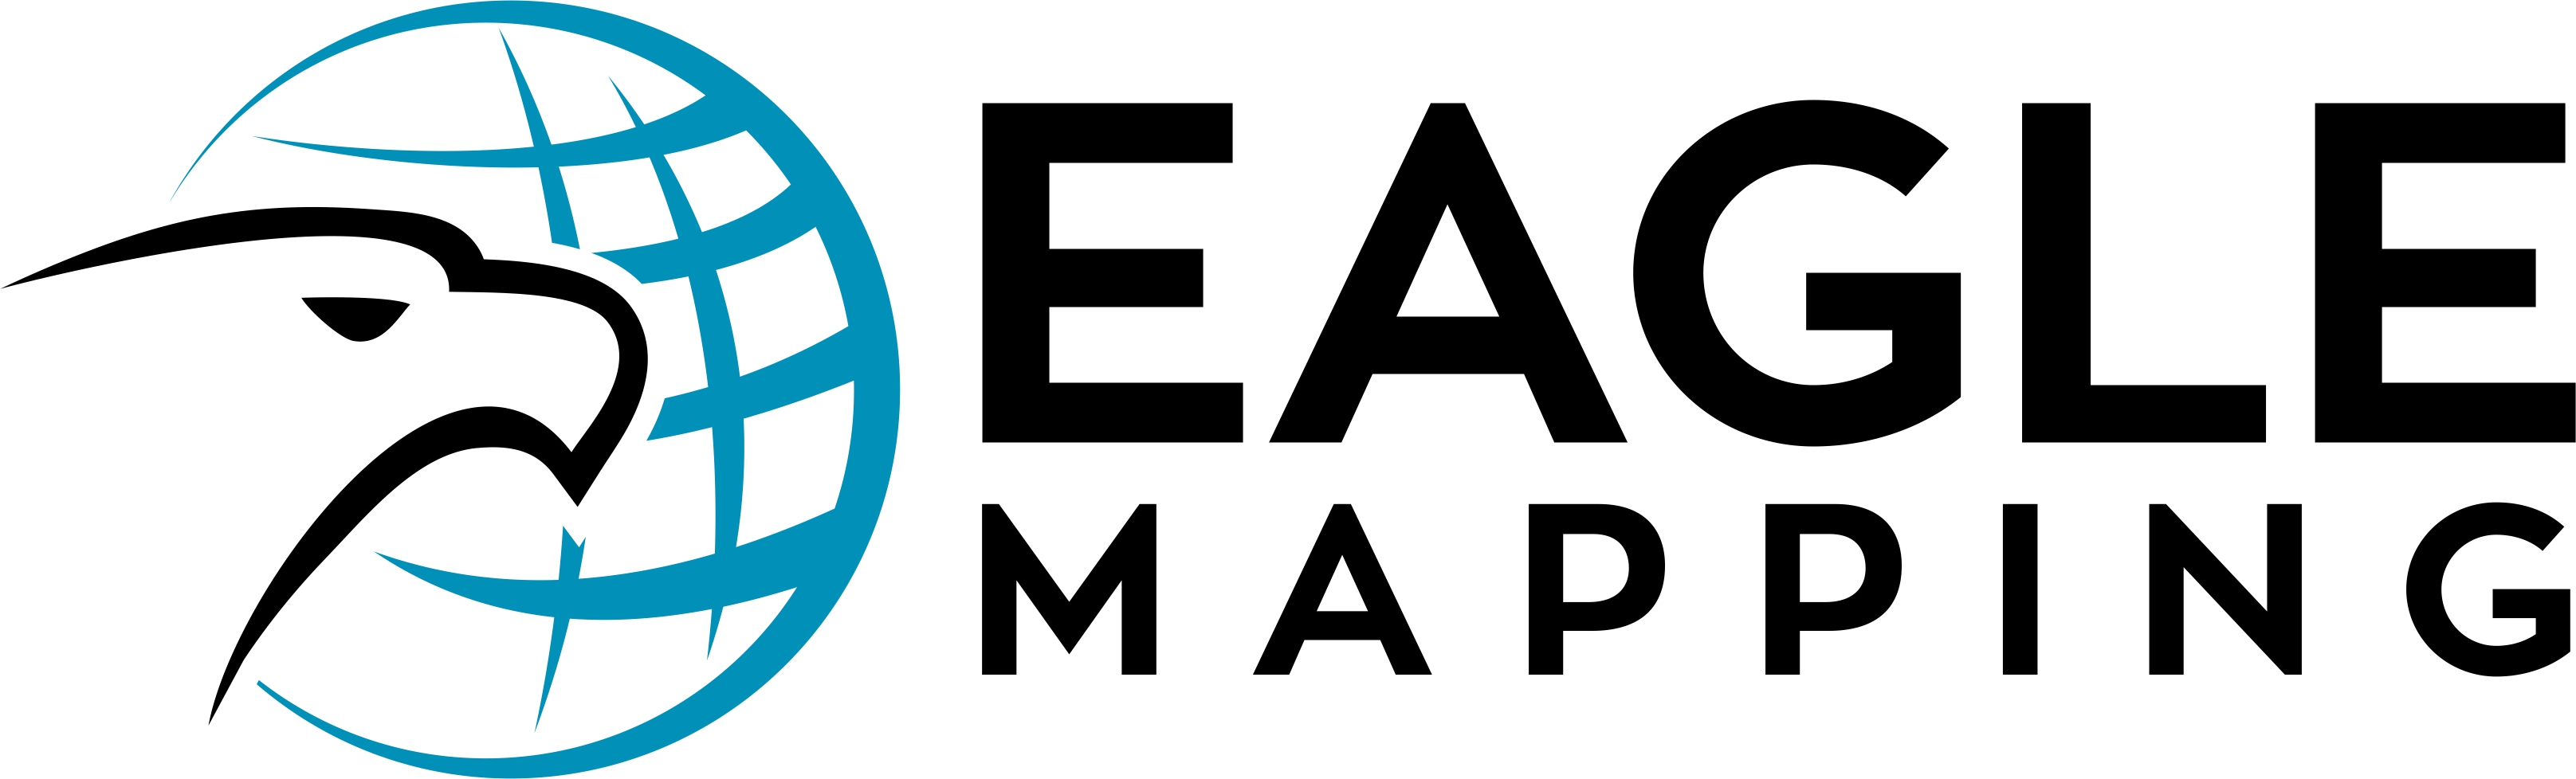 Eagle Mapping Ltd Logo